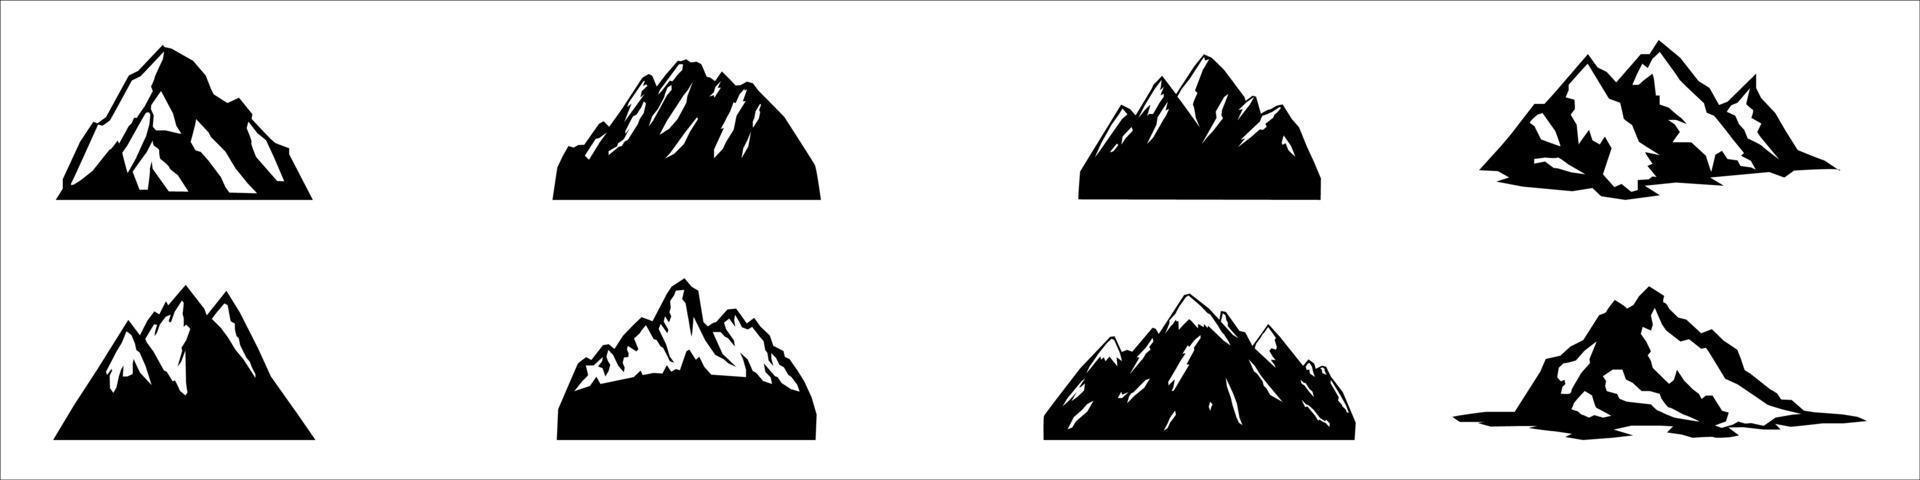 Snowy mountain peaks vector